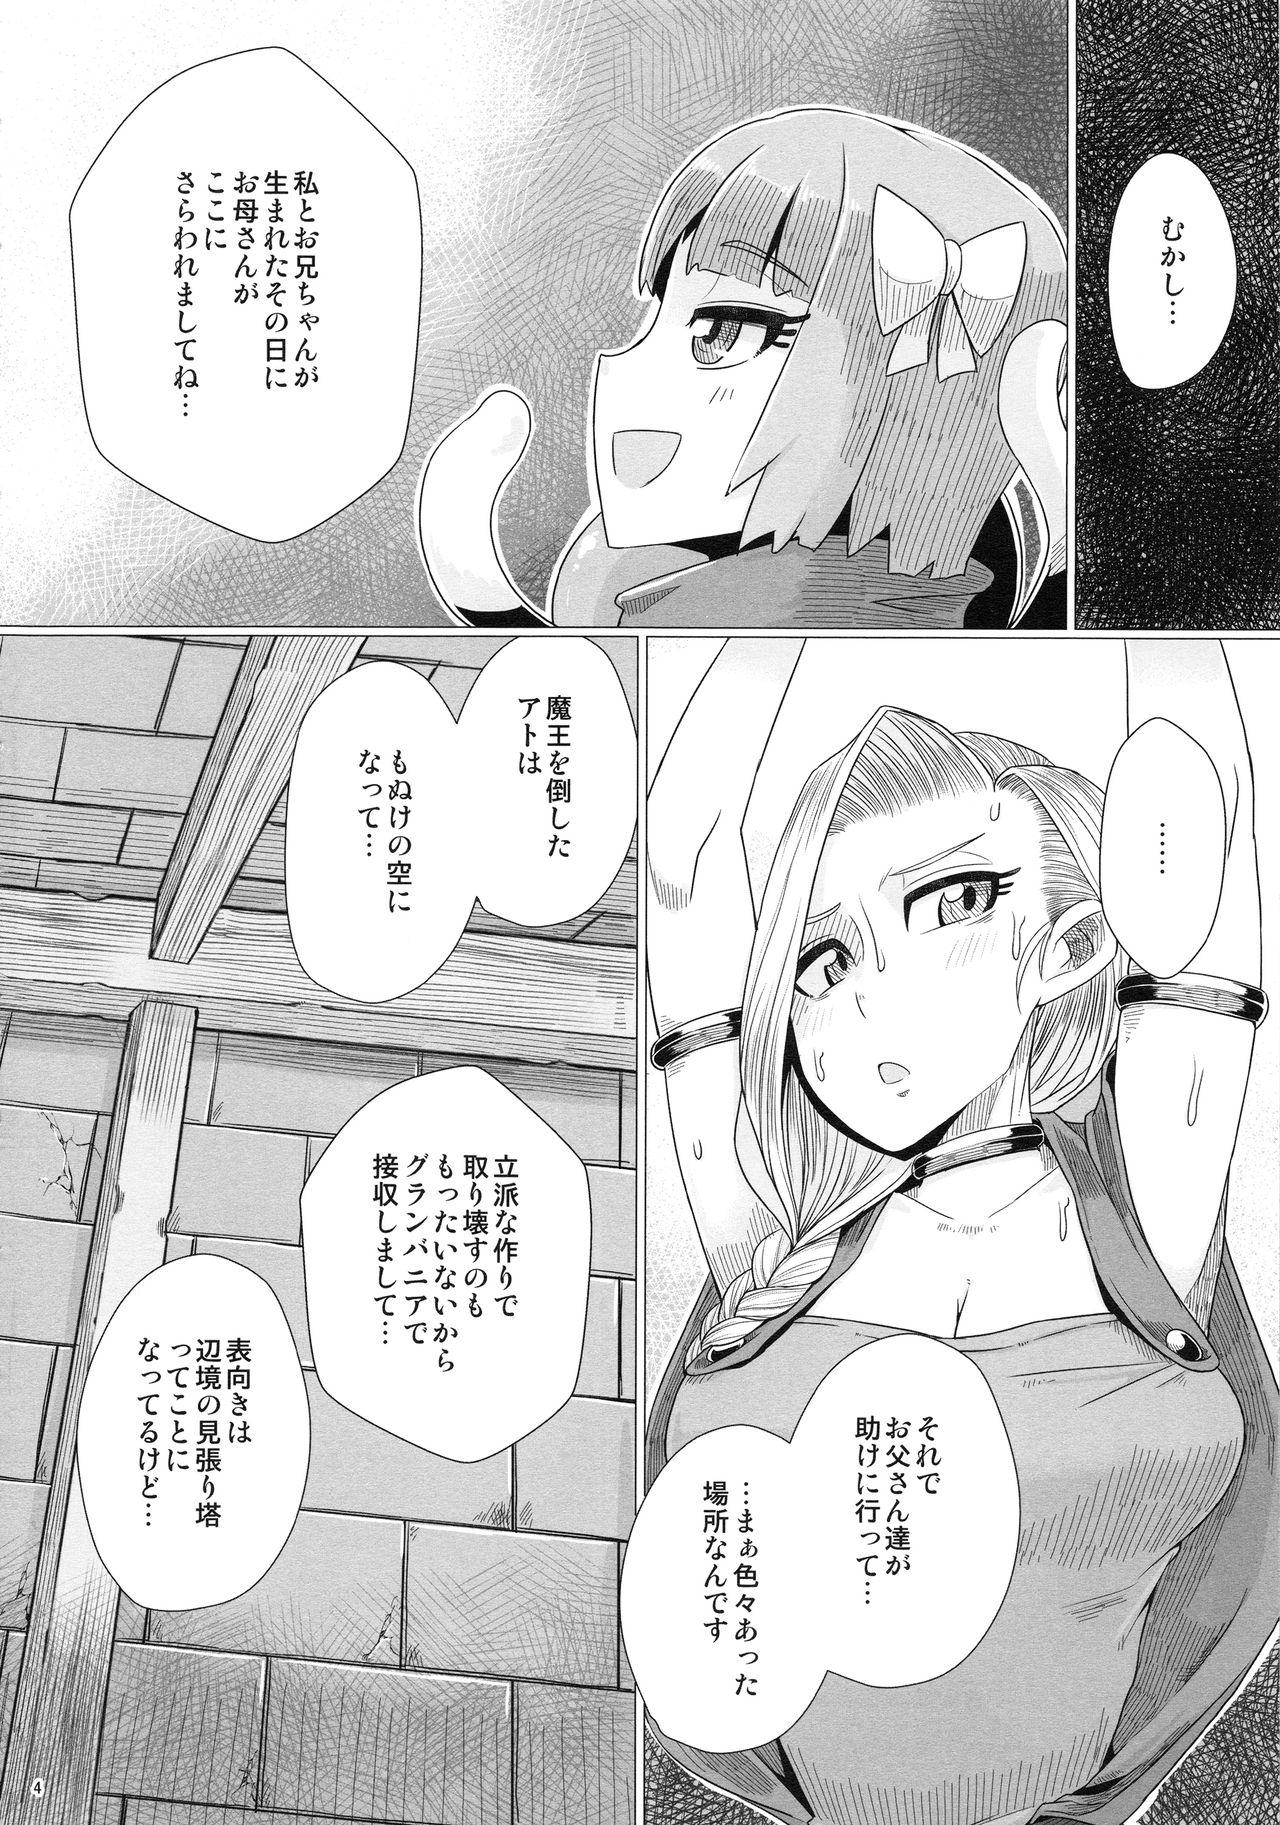 Sextape Zoku Yamaoku e Ikou! - Dragon quest v Perrito - Page 5